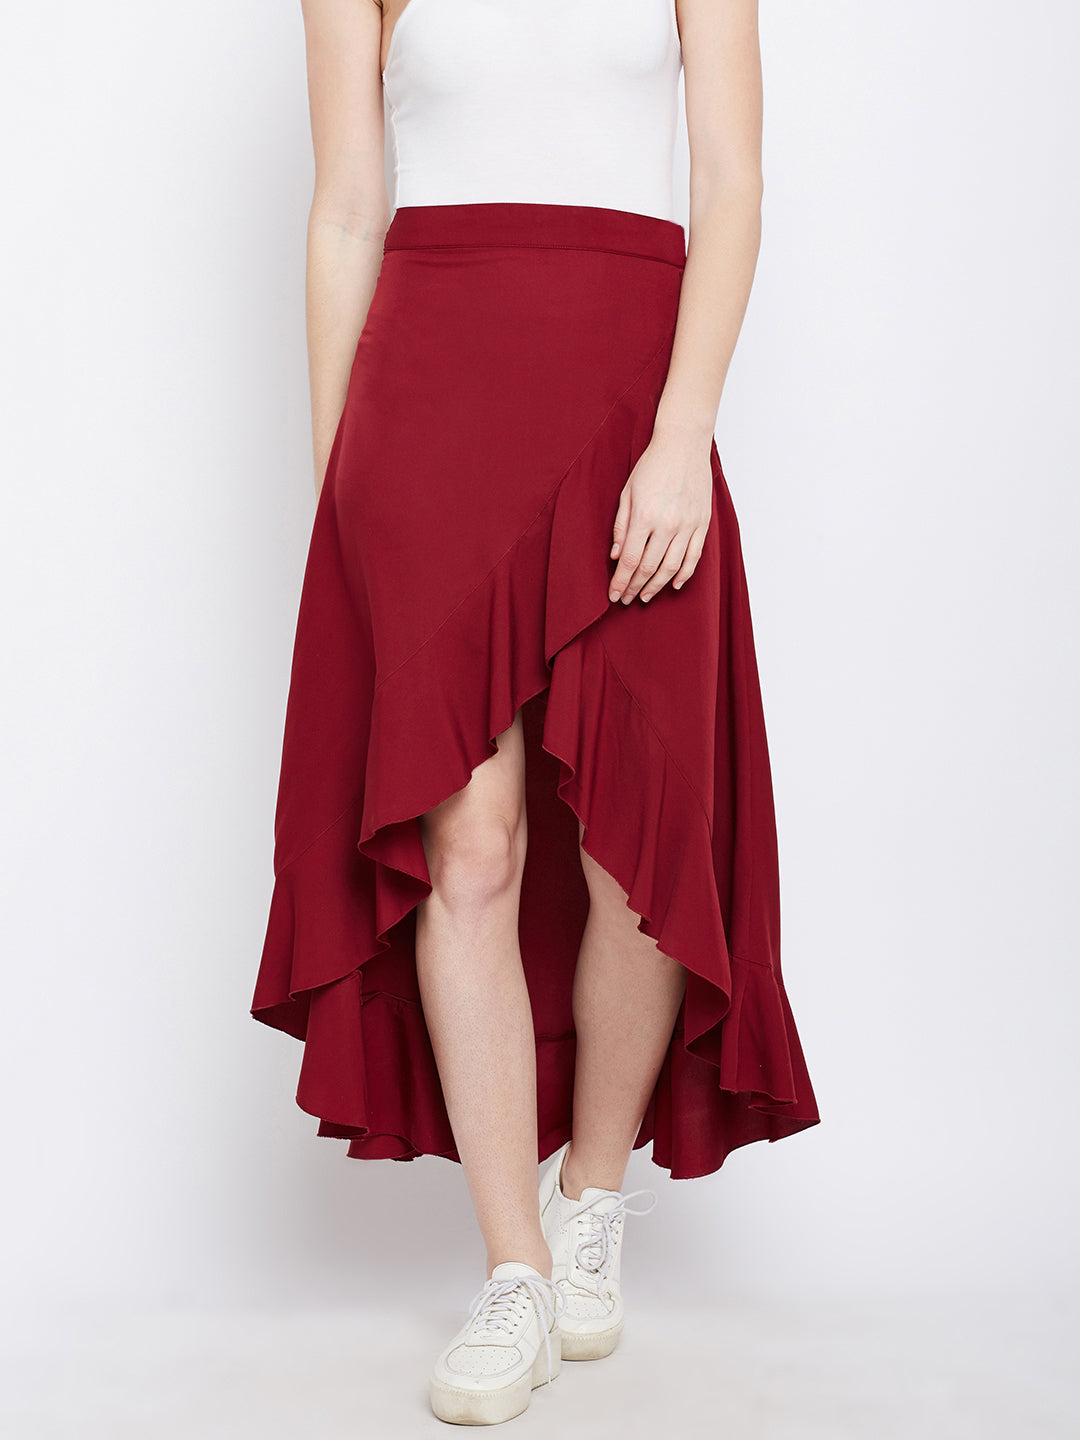 Mera Red Top Bra High Waist Skirt Cotton Small Medium, Women's Fashion,  Dresses & Sets, Sets or Coordinates on Carousell